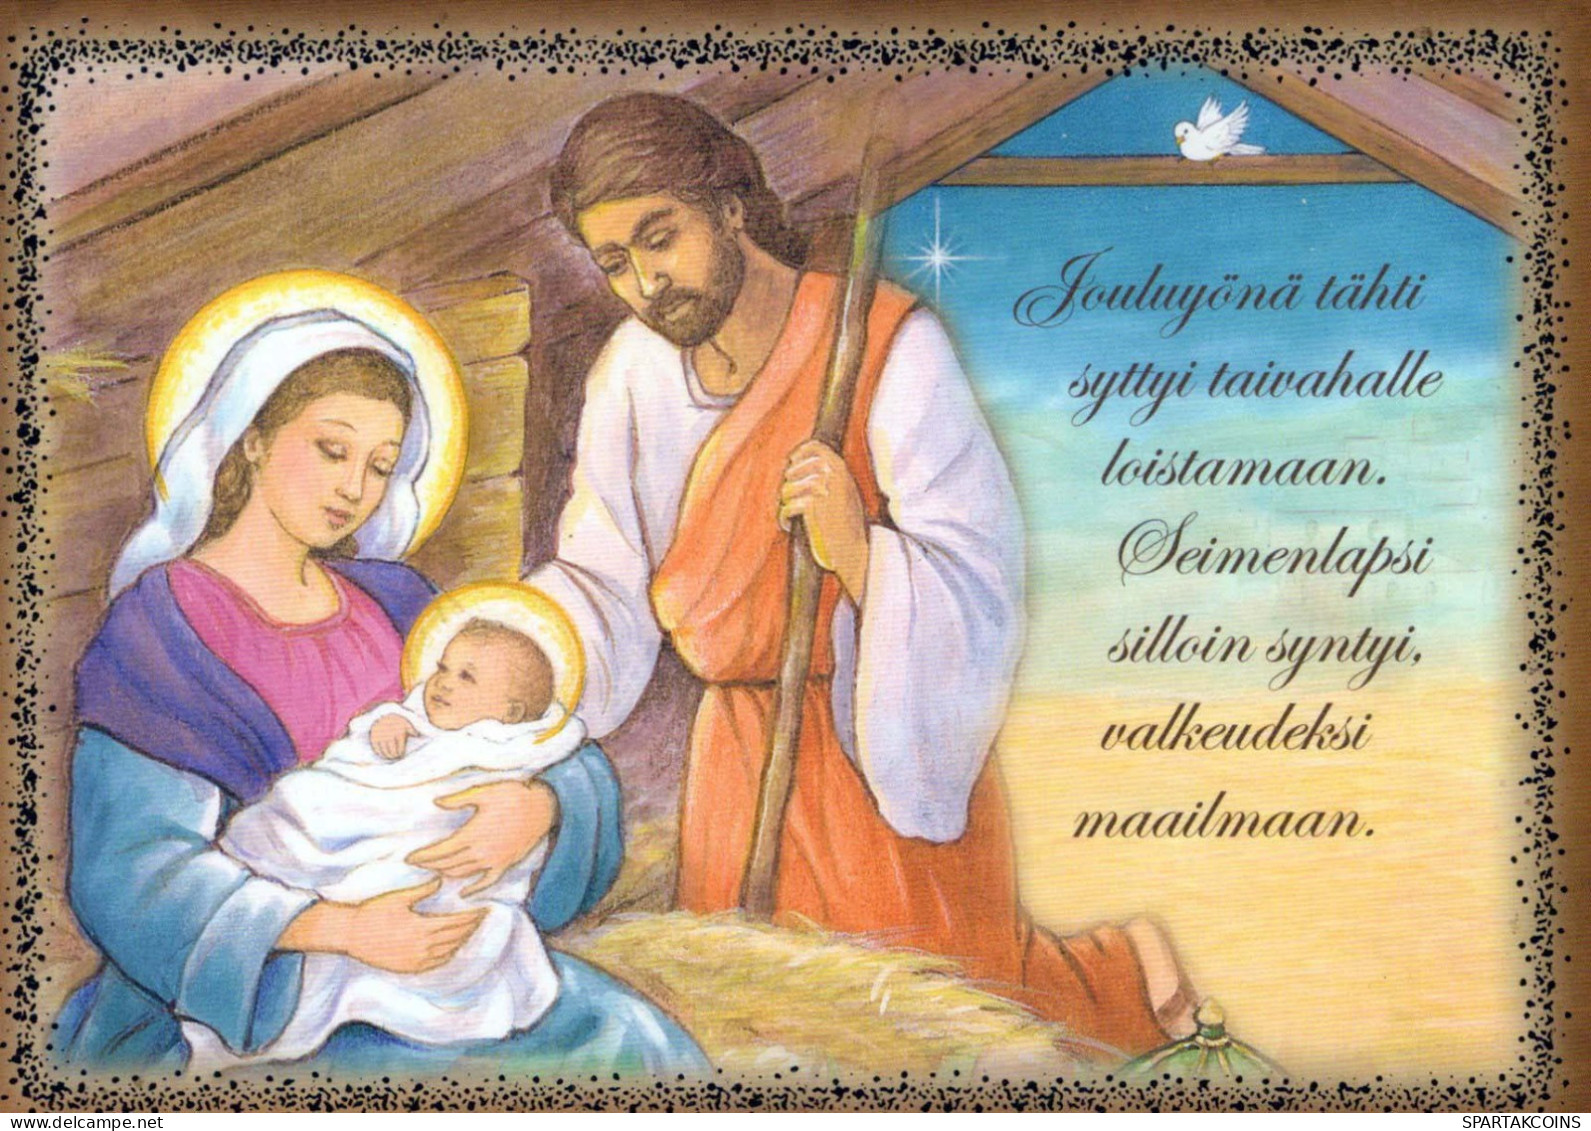 Vergine Maria Madonna Gesù Bambino Natale Religione Vintage Cartolina CPSM #PBB994.IT - Vierge Marie & Madones